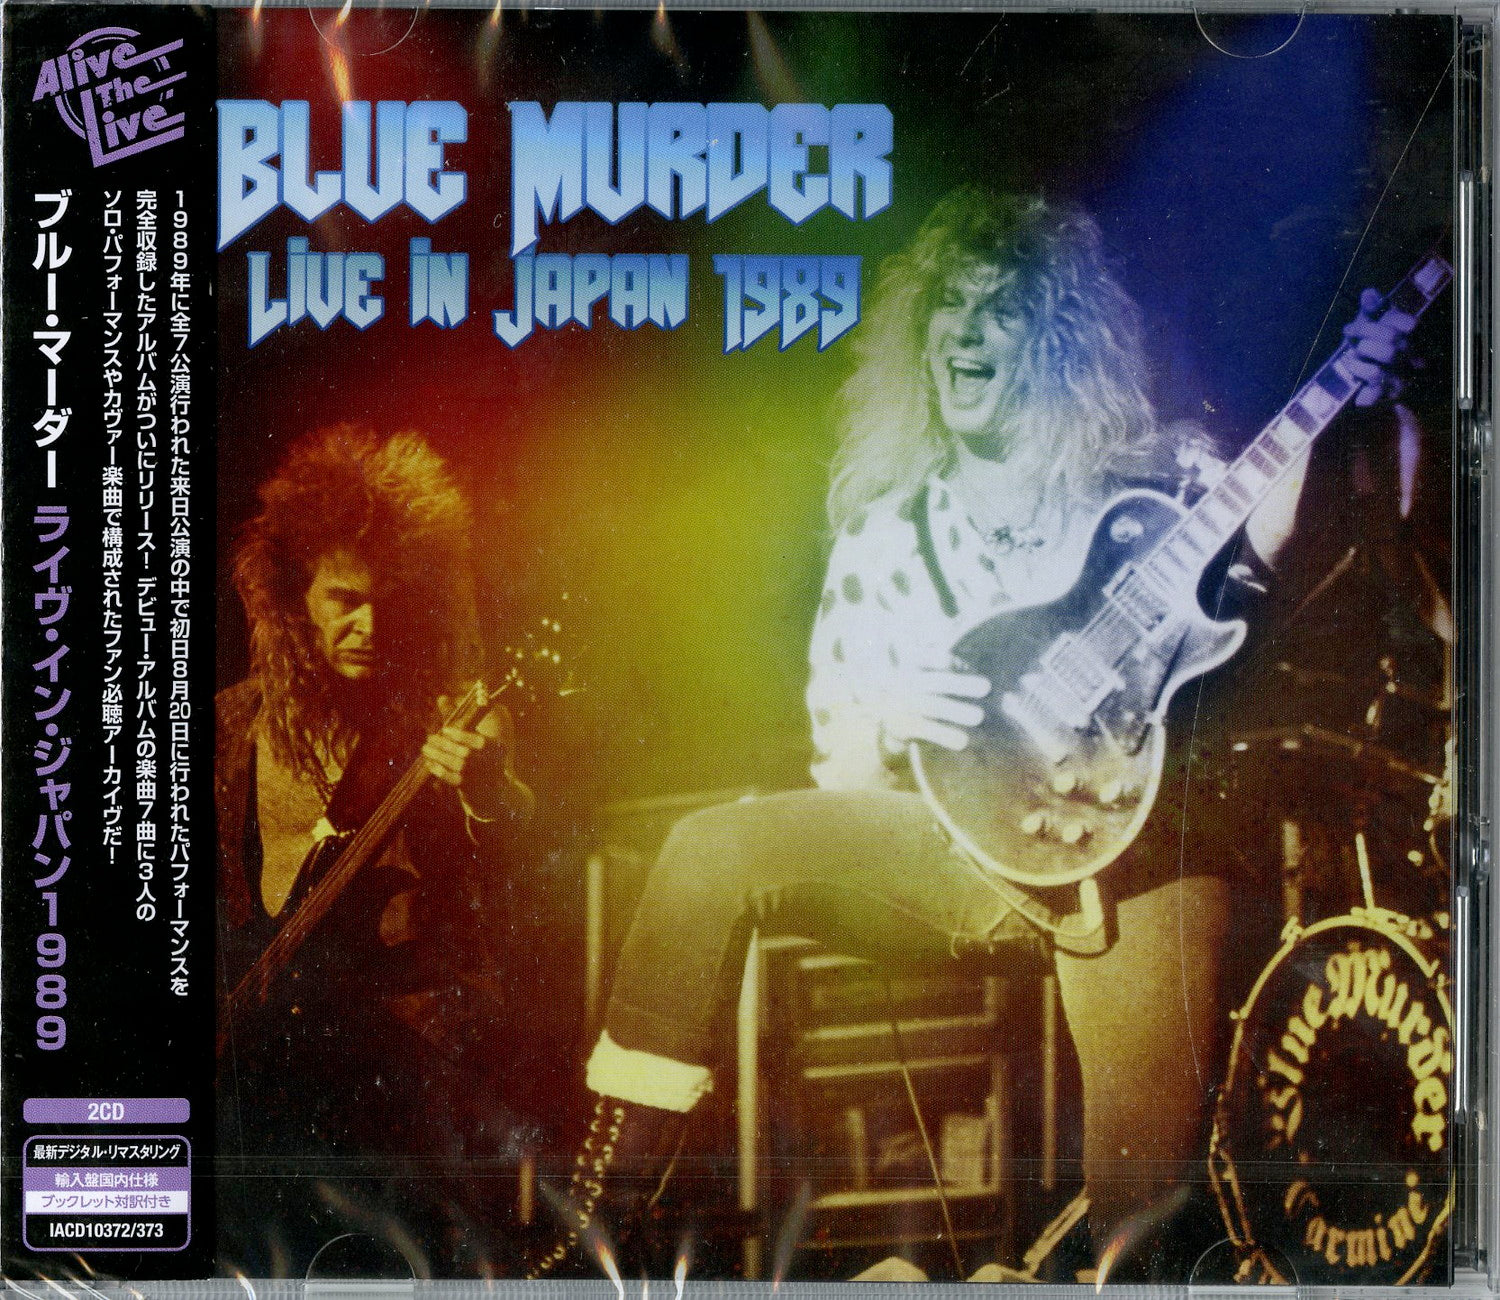 Blue Murder (Rock) - Live In Japan 1989 - Import 2 CD – CDs Vinyl 